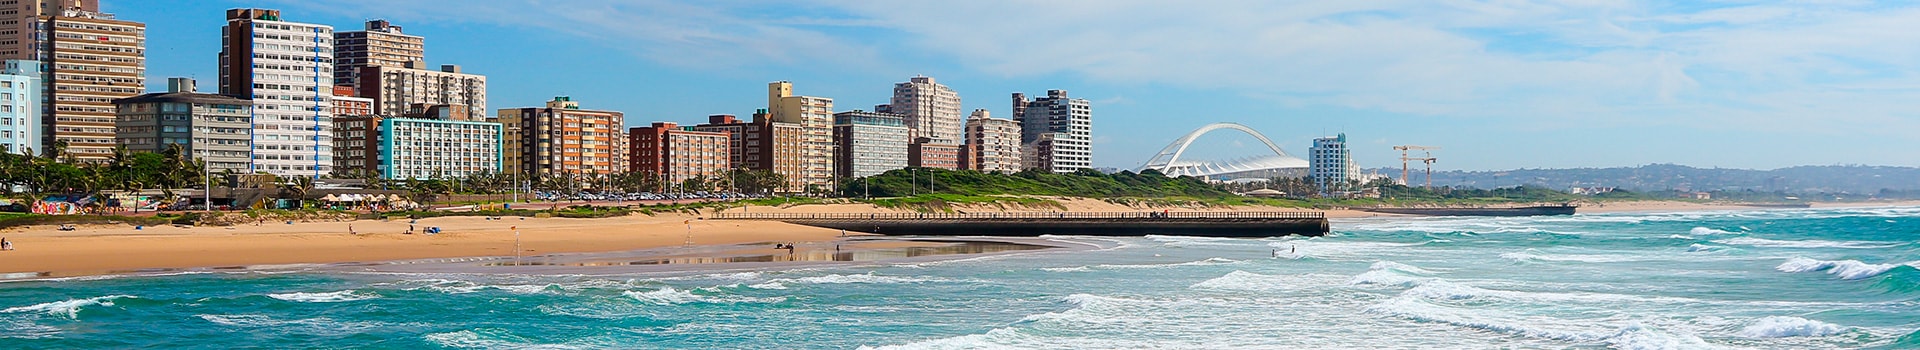 Lisboa - Durban